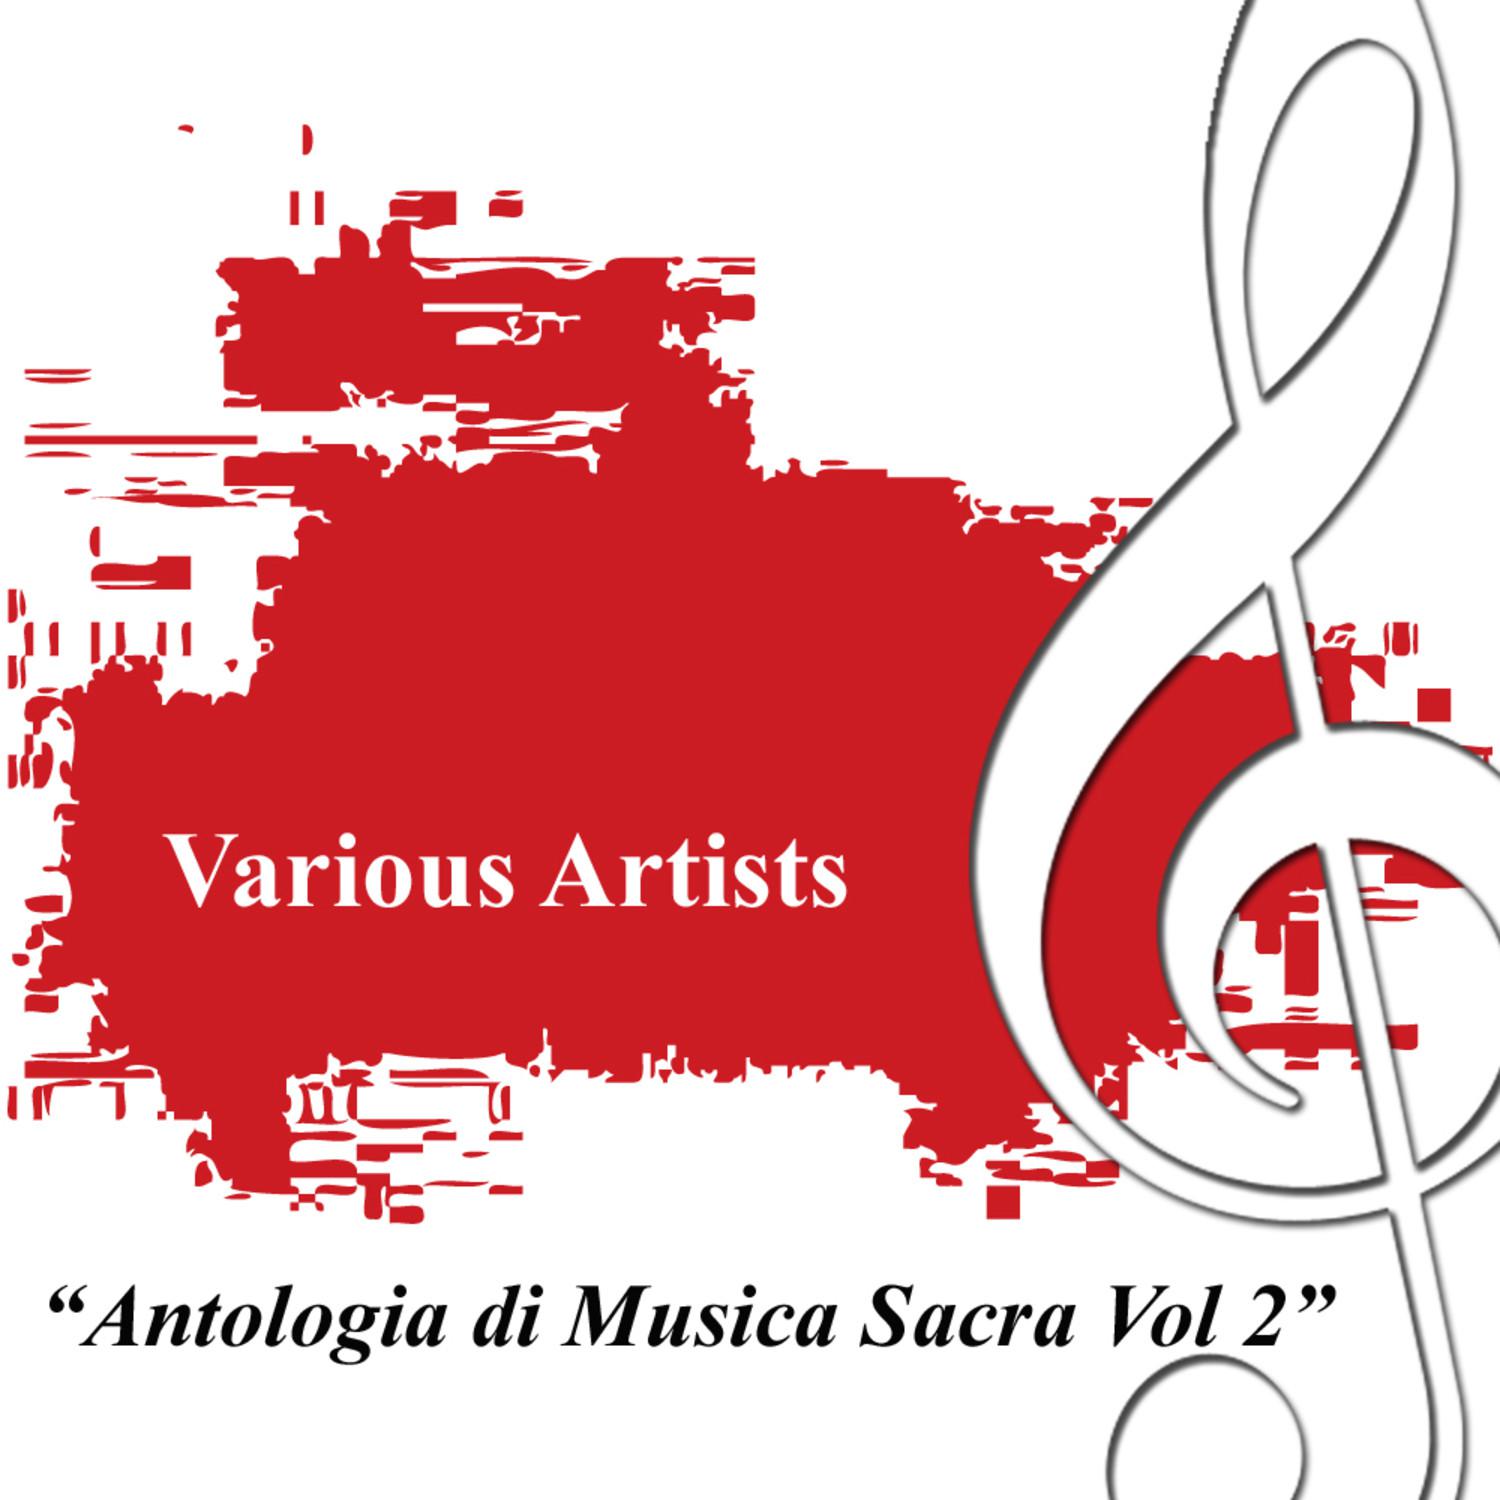 Antologia Di Musica Sacra Vol. 2